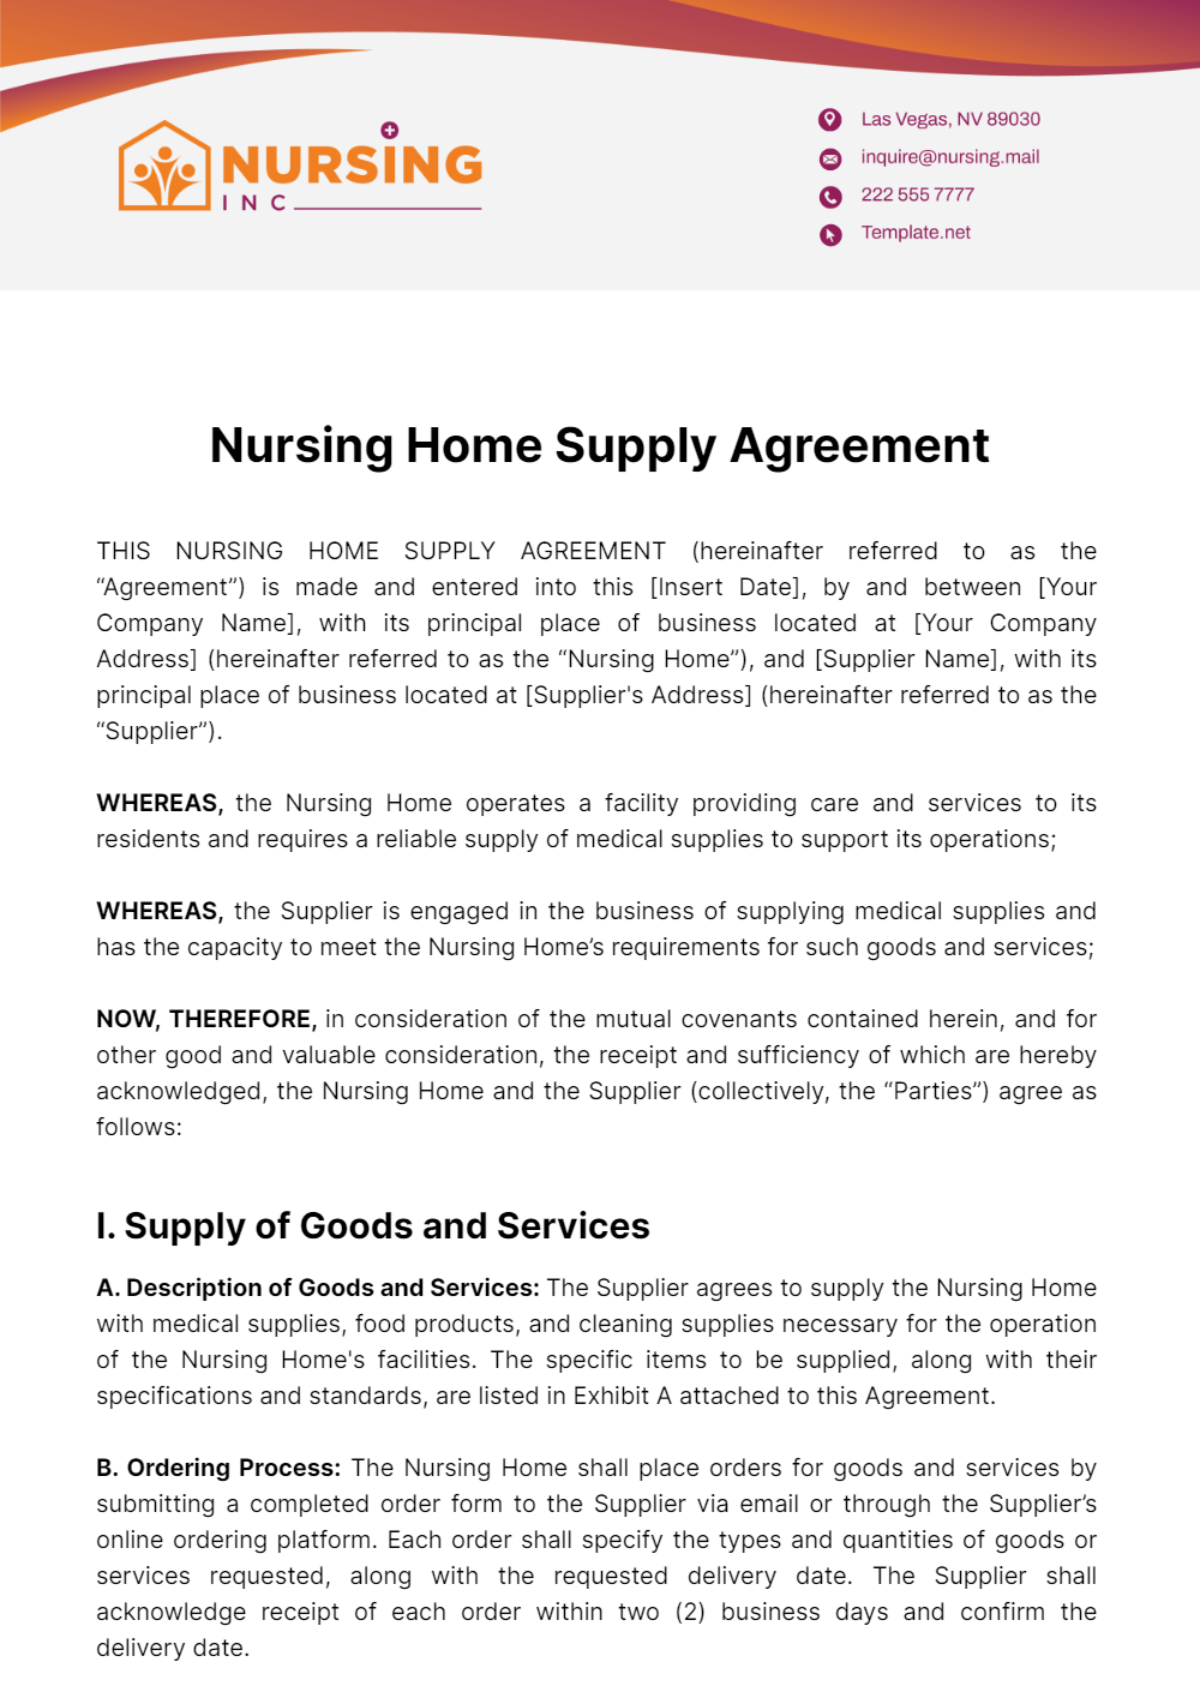 Nursing Home Supply Agreement Template